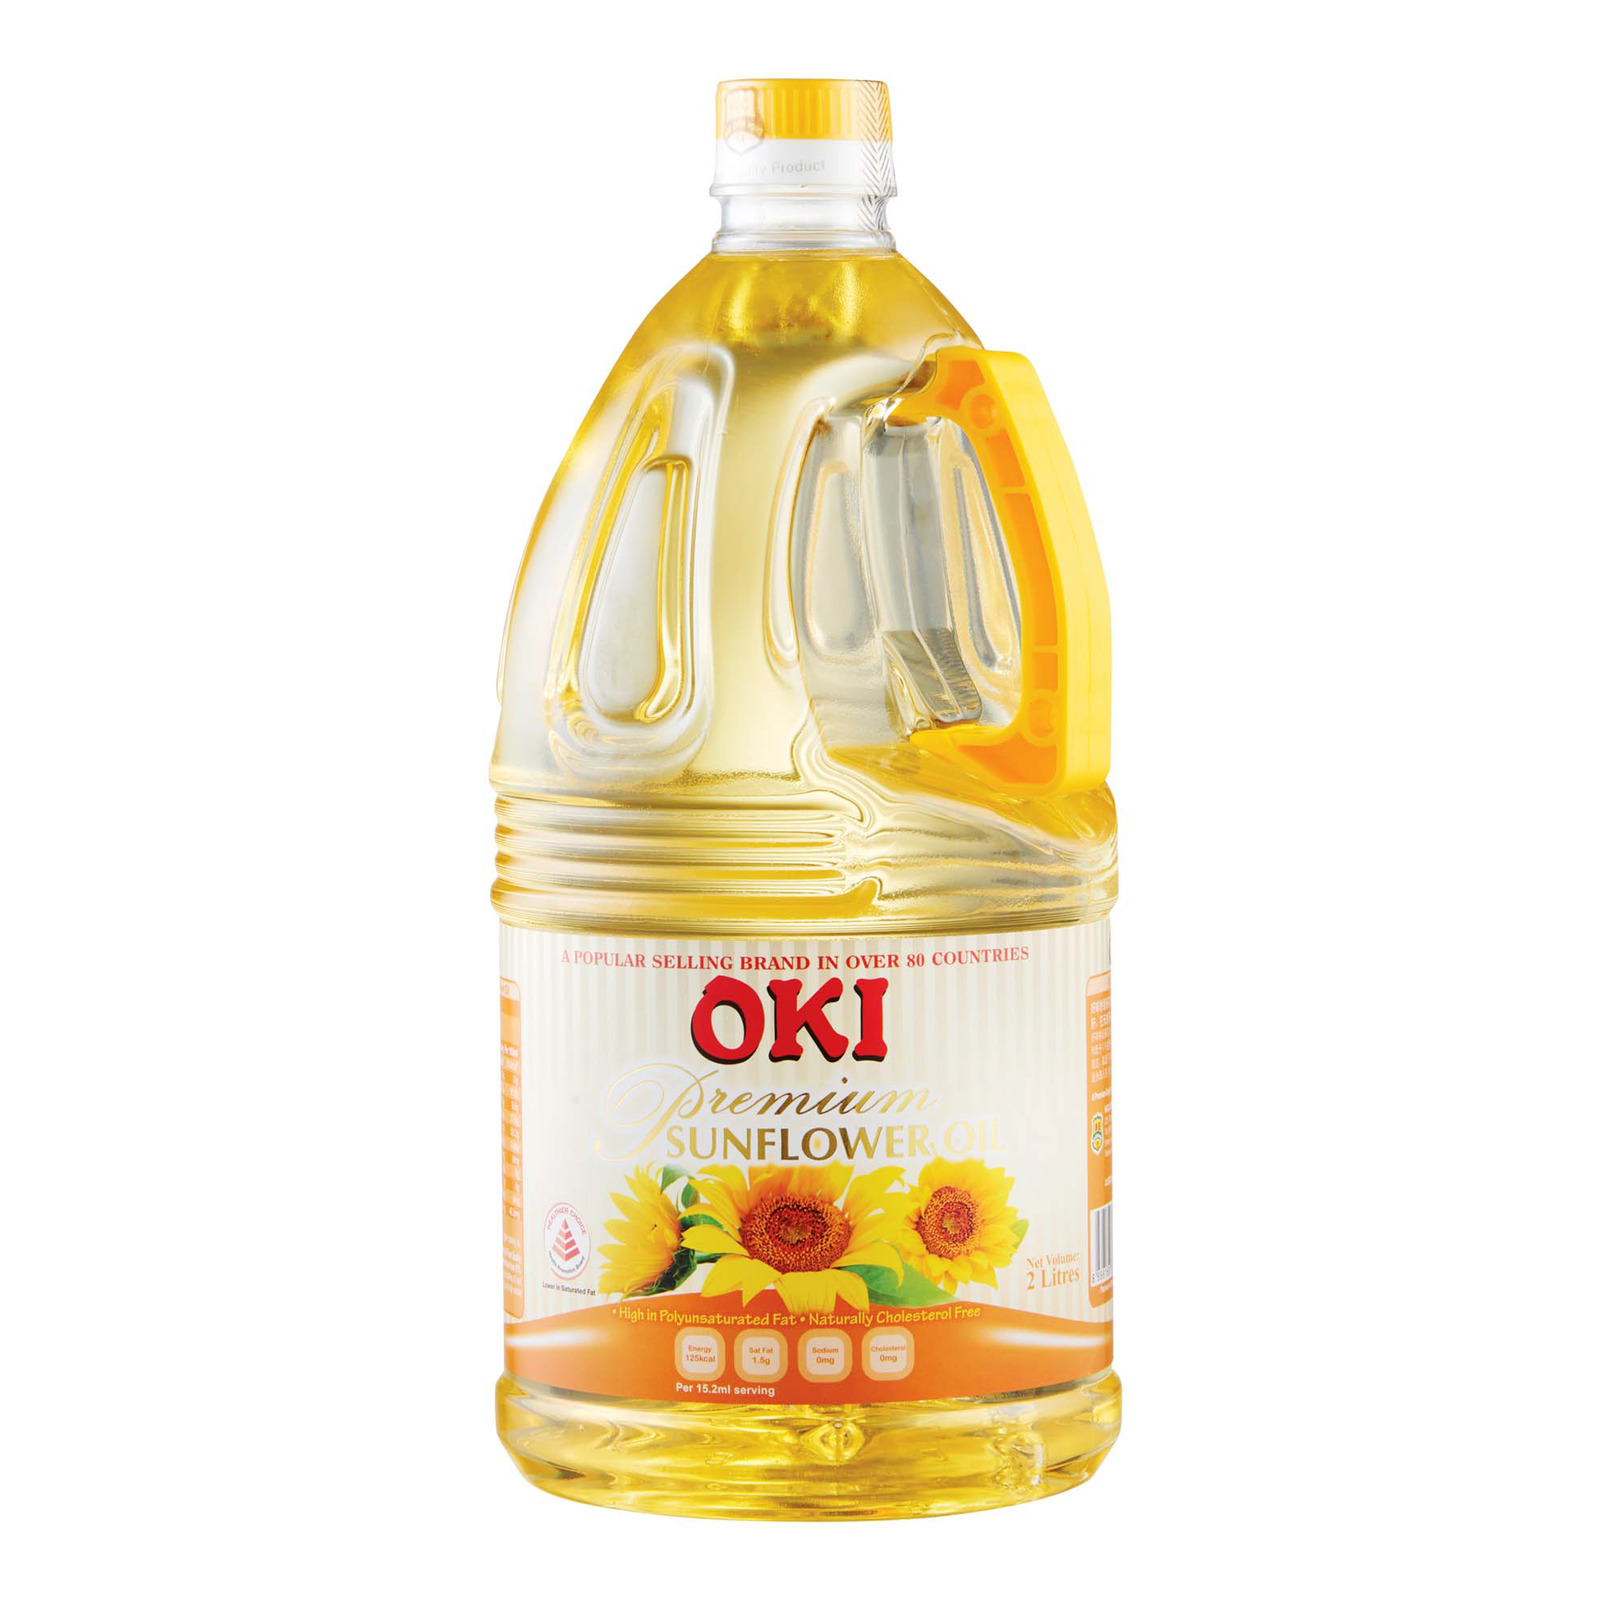 Oki Premium Sunflower Oil 2L